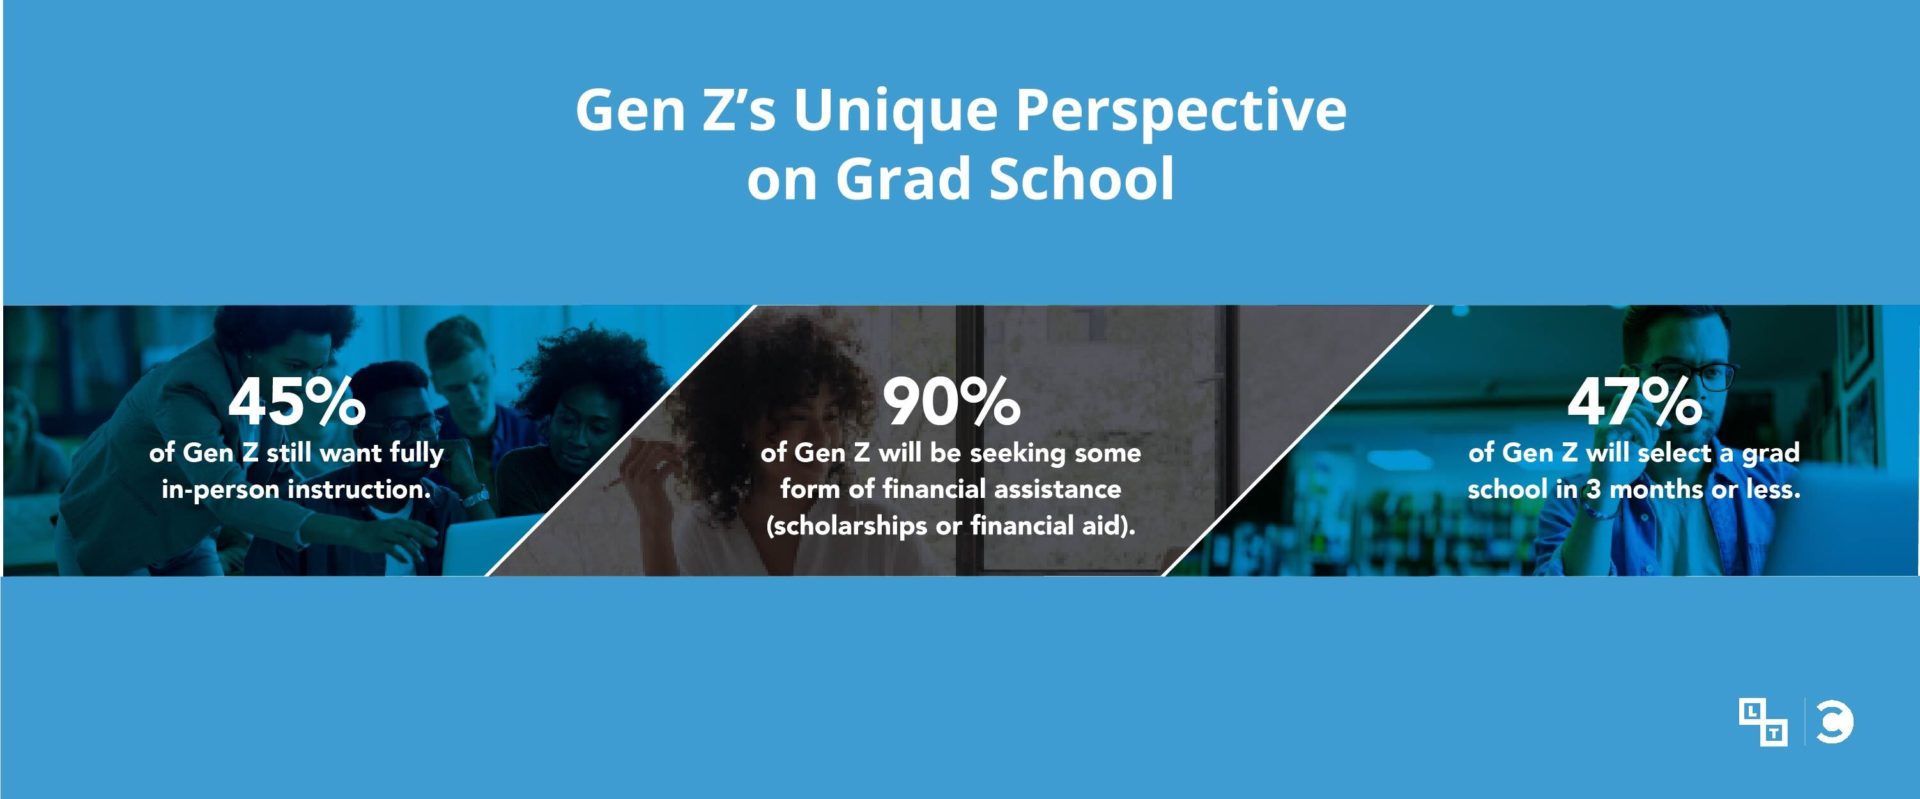 Gen Z's unique perspective on Grad School